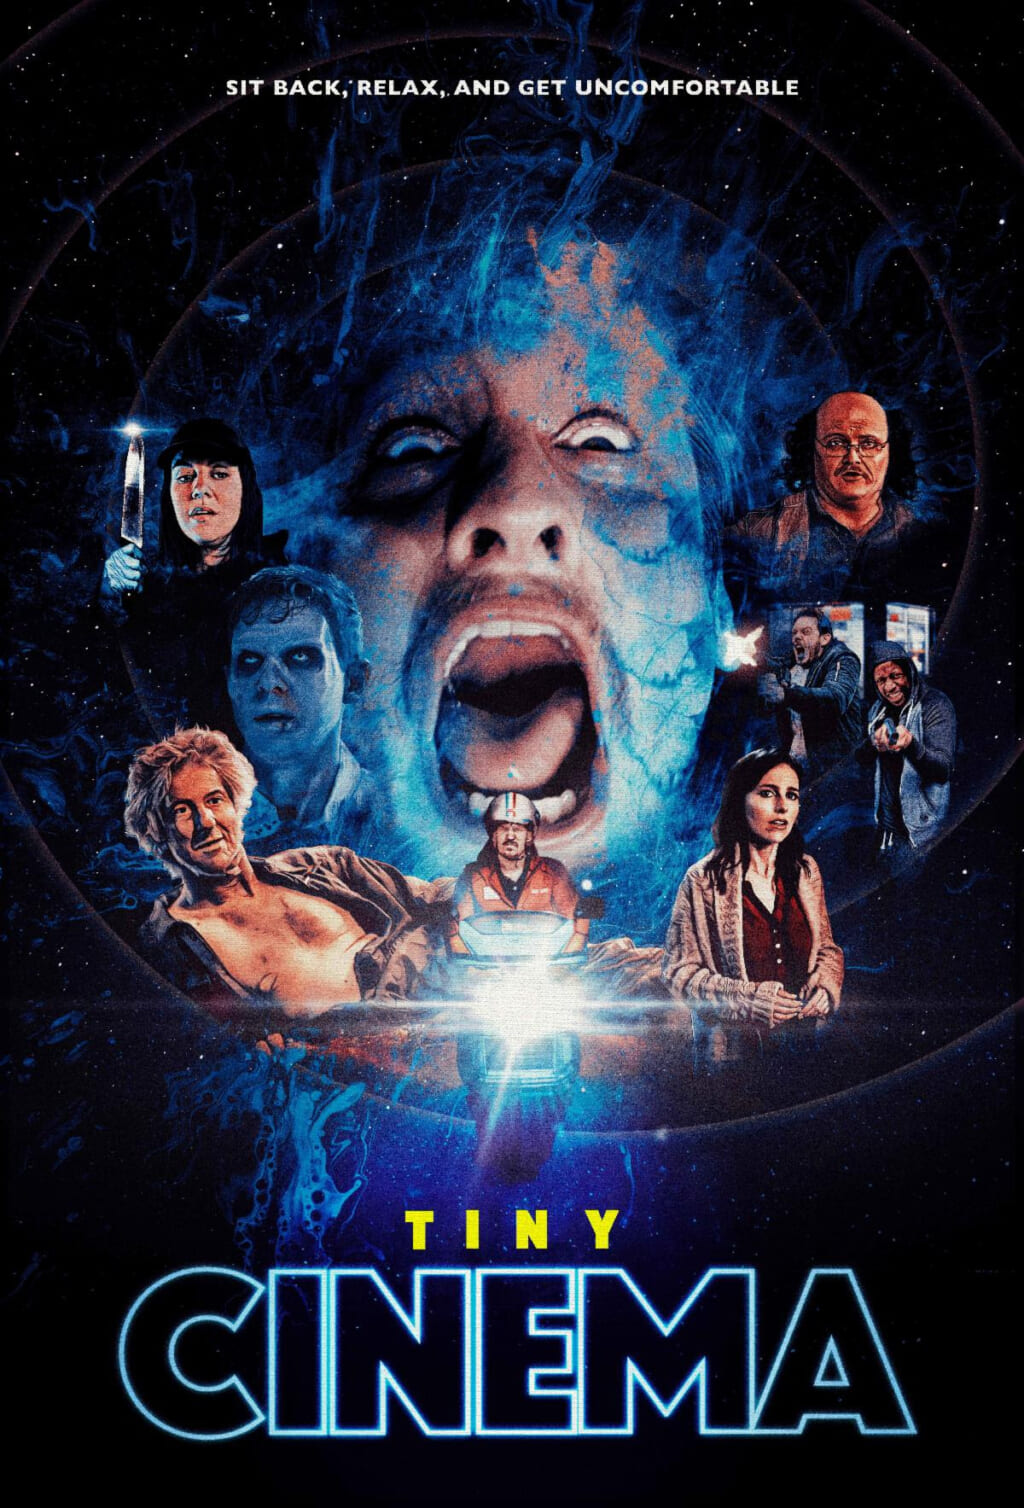 tiny cinema 1024x1508 - 'Tiny Cinema' Trailer: Get Ready for Six Twisted Tales Of Terror [Watch]